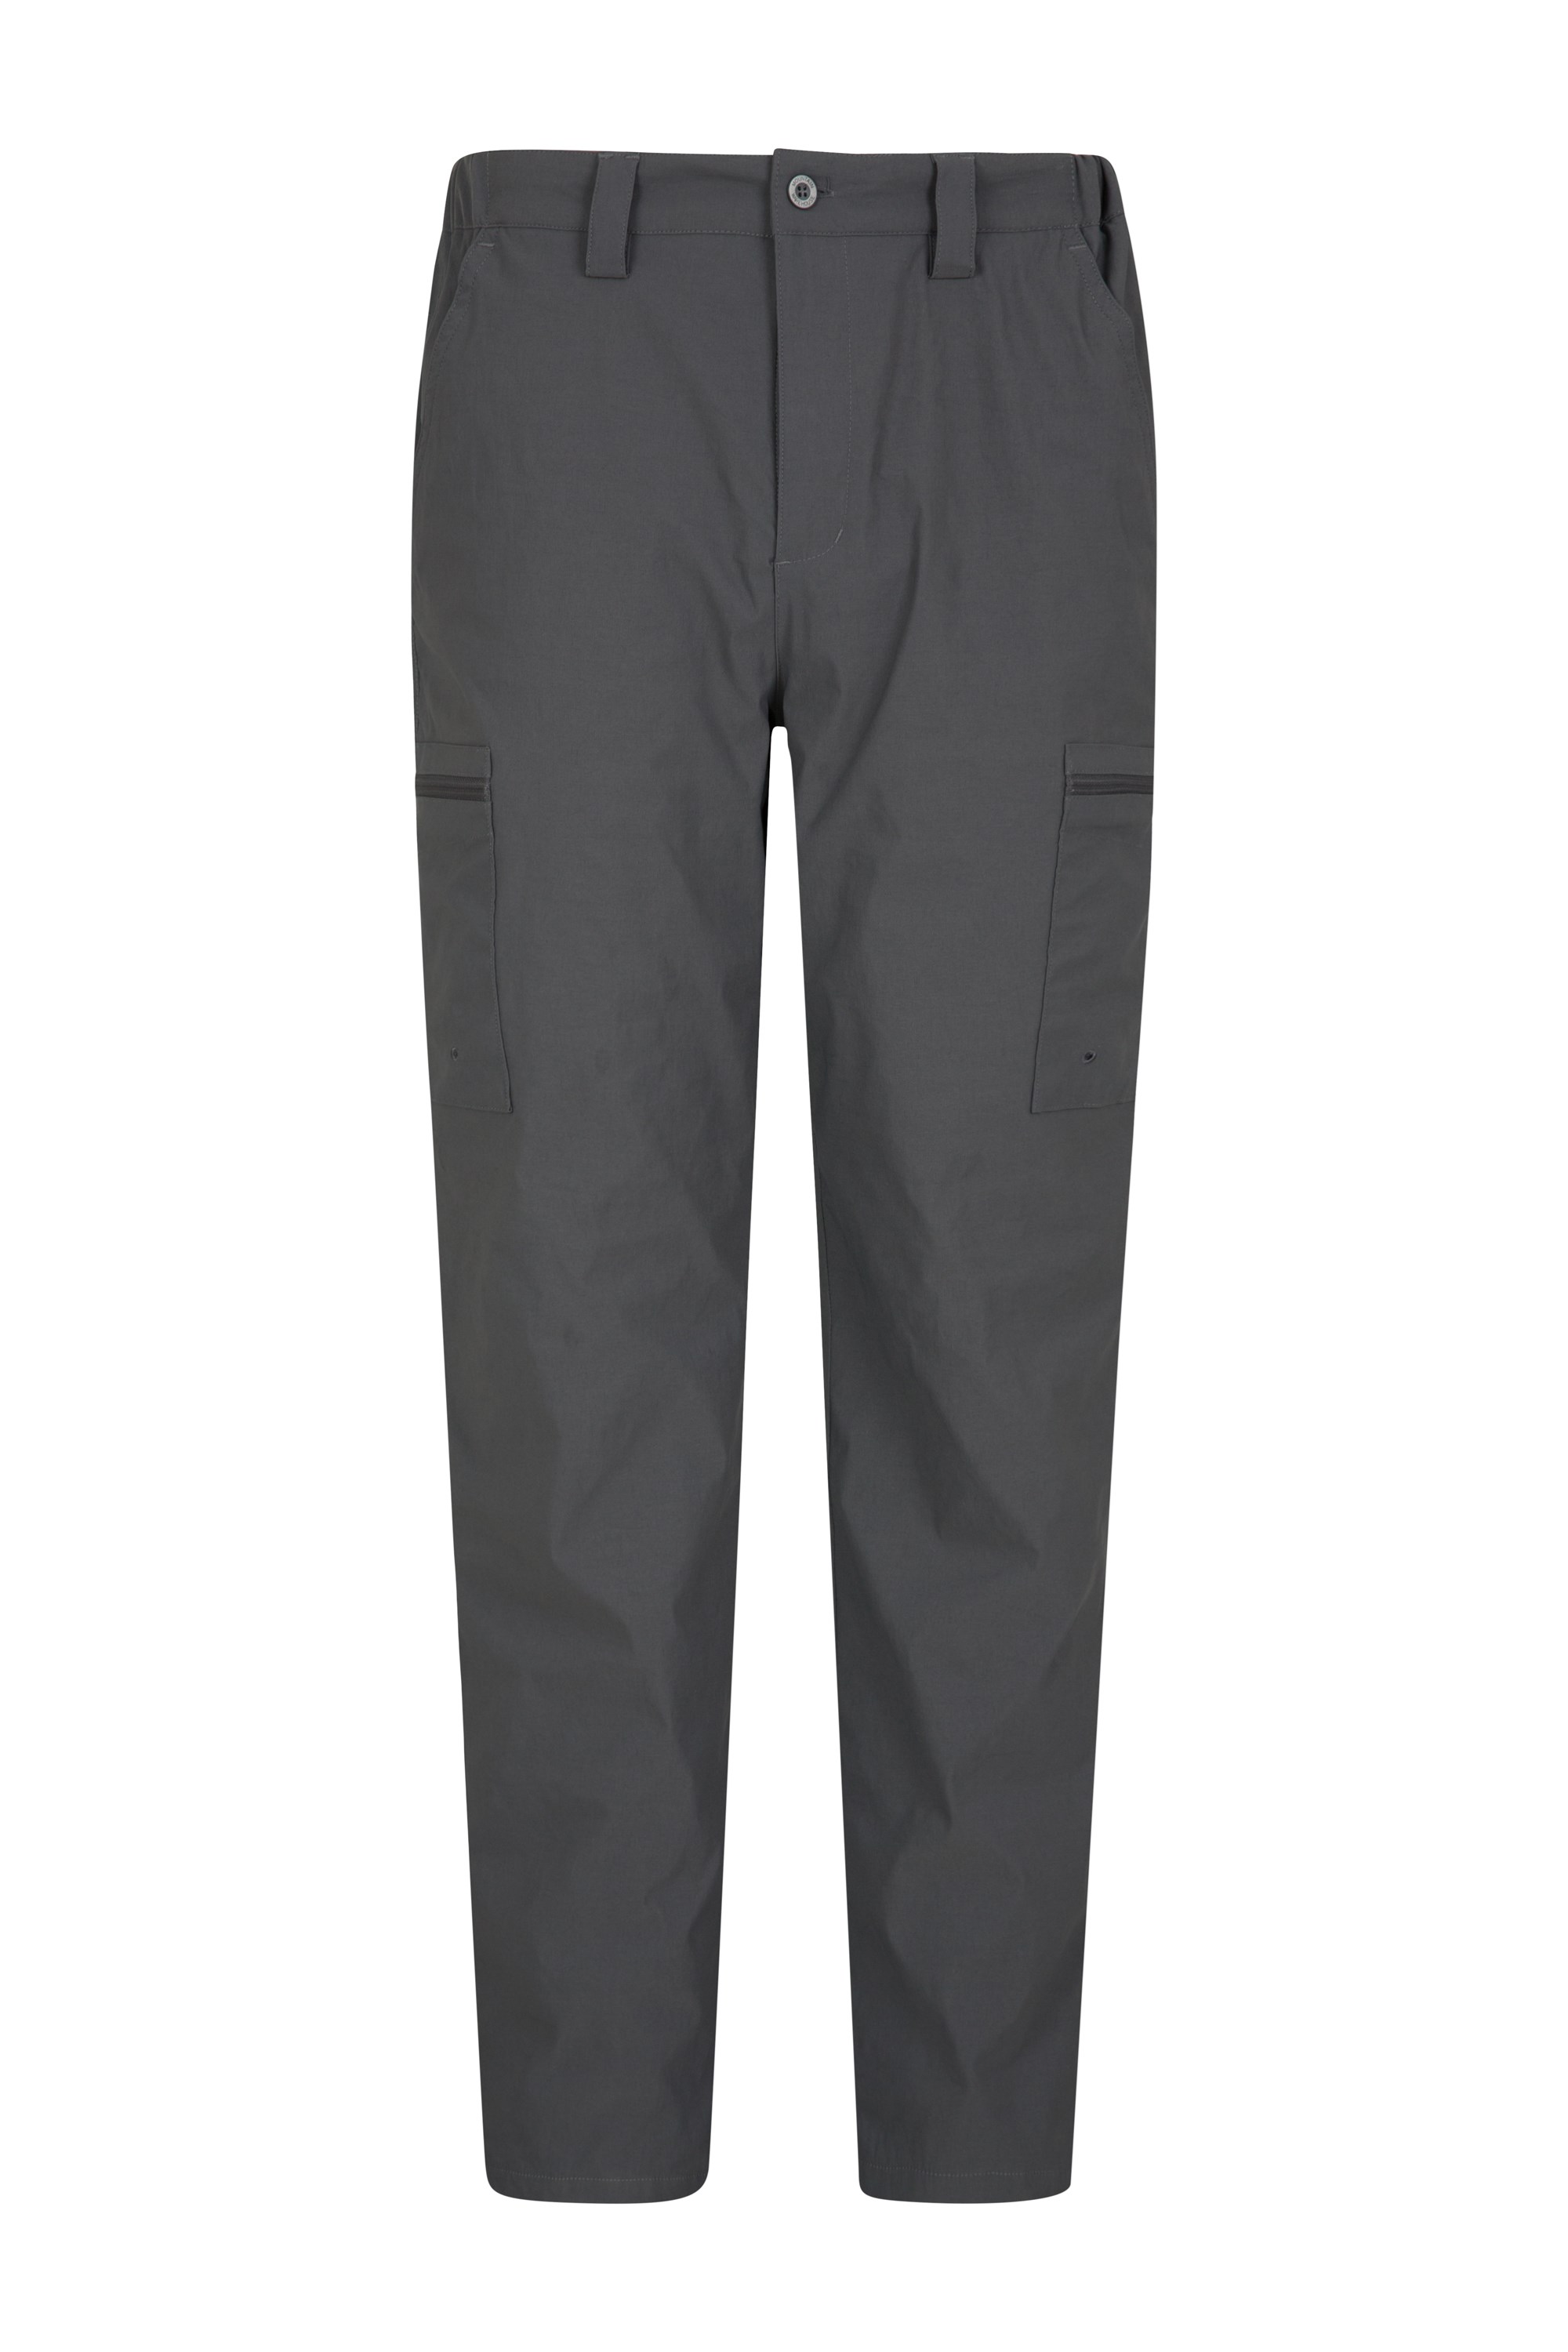 Mens Winter Trek Stretch Trousers - Short Length - Grey